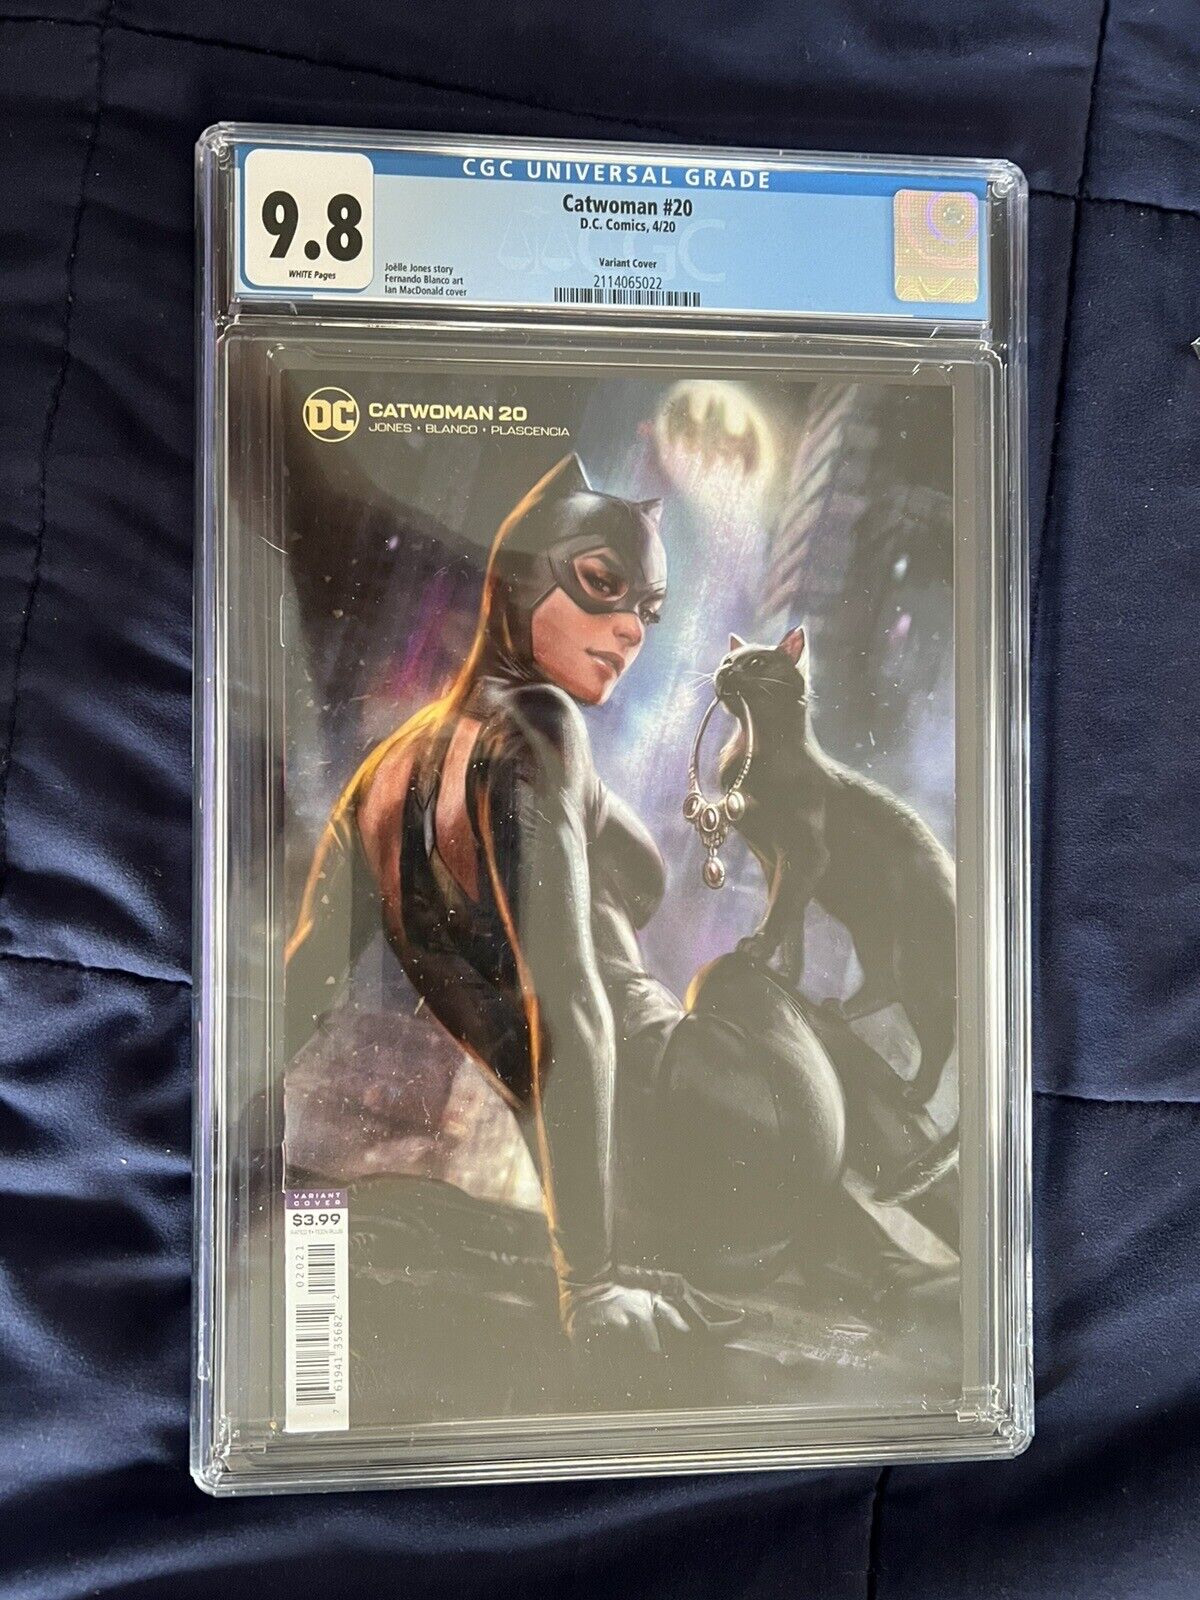 Catwoman #20 (DC Comics, April 2020)